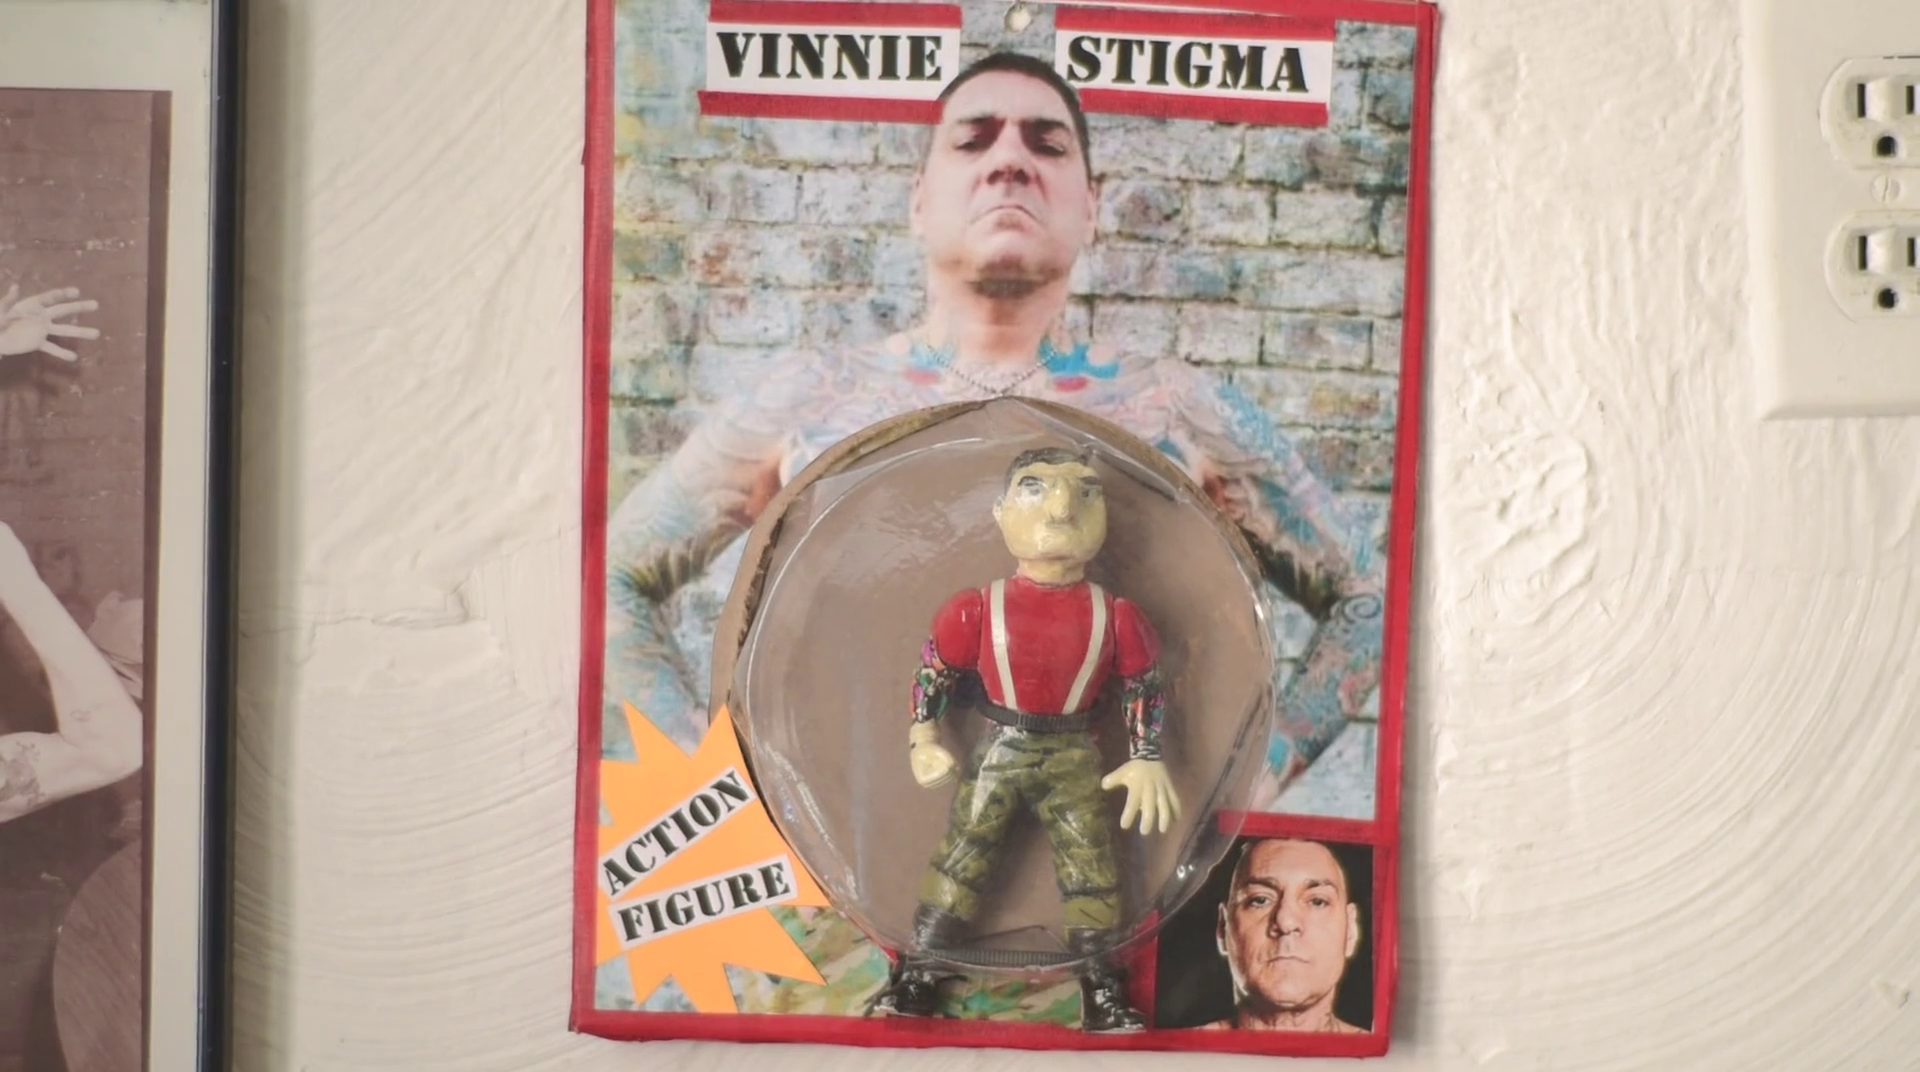 Vinnie Stigma action figure